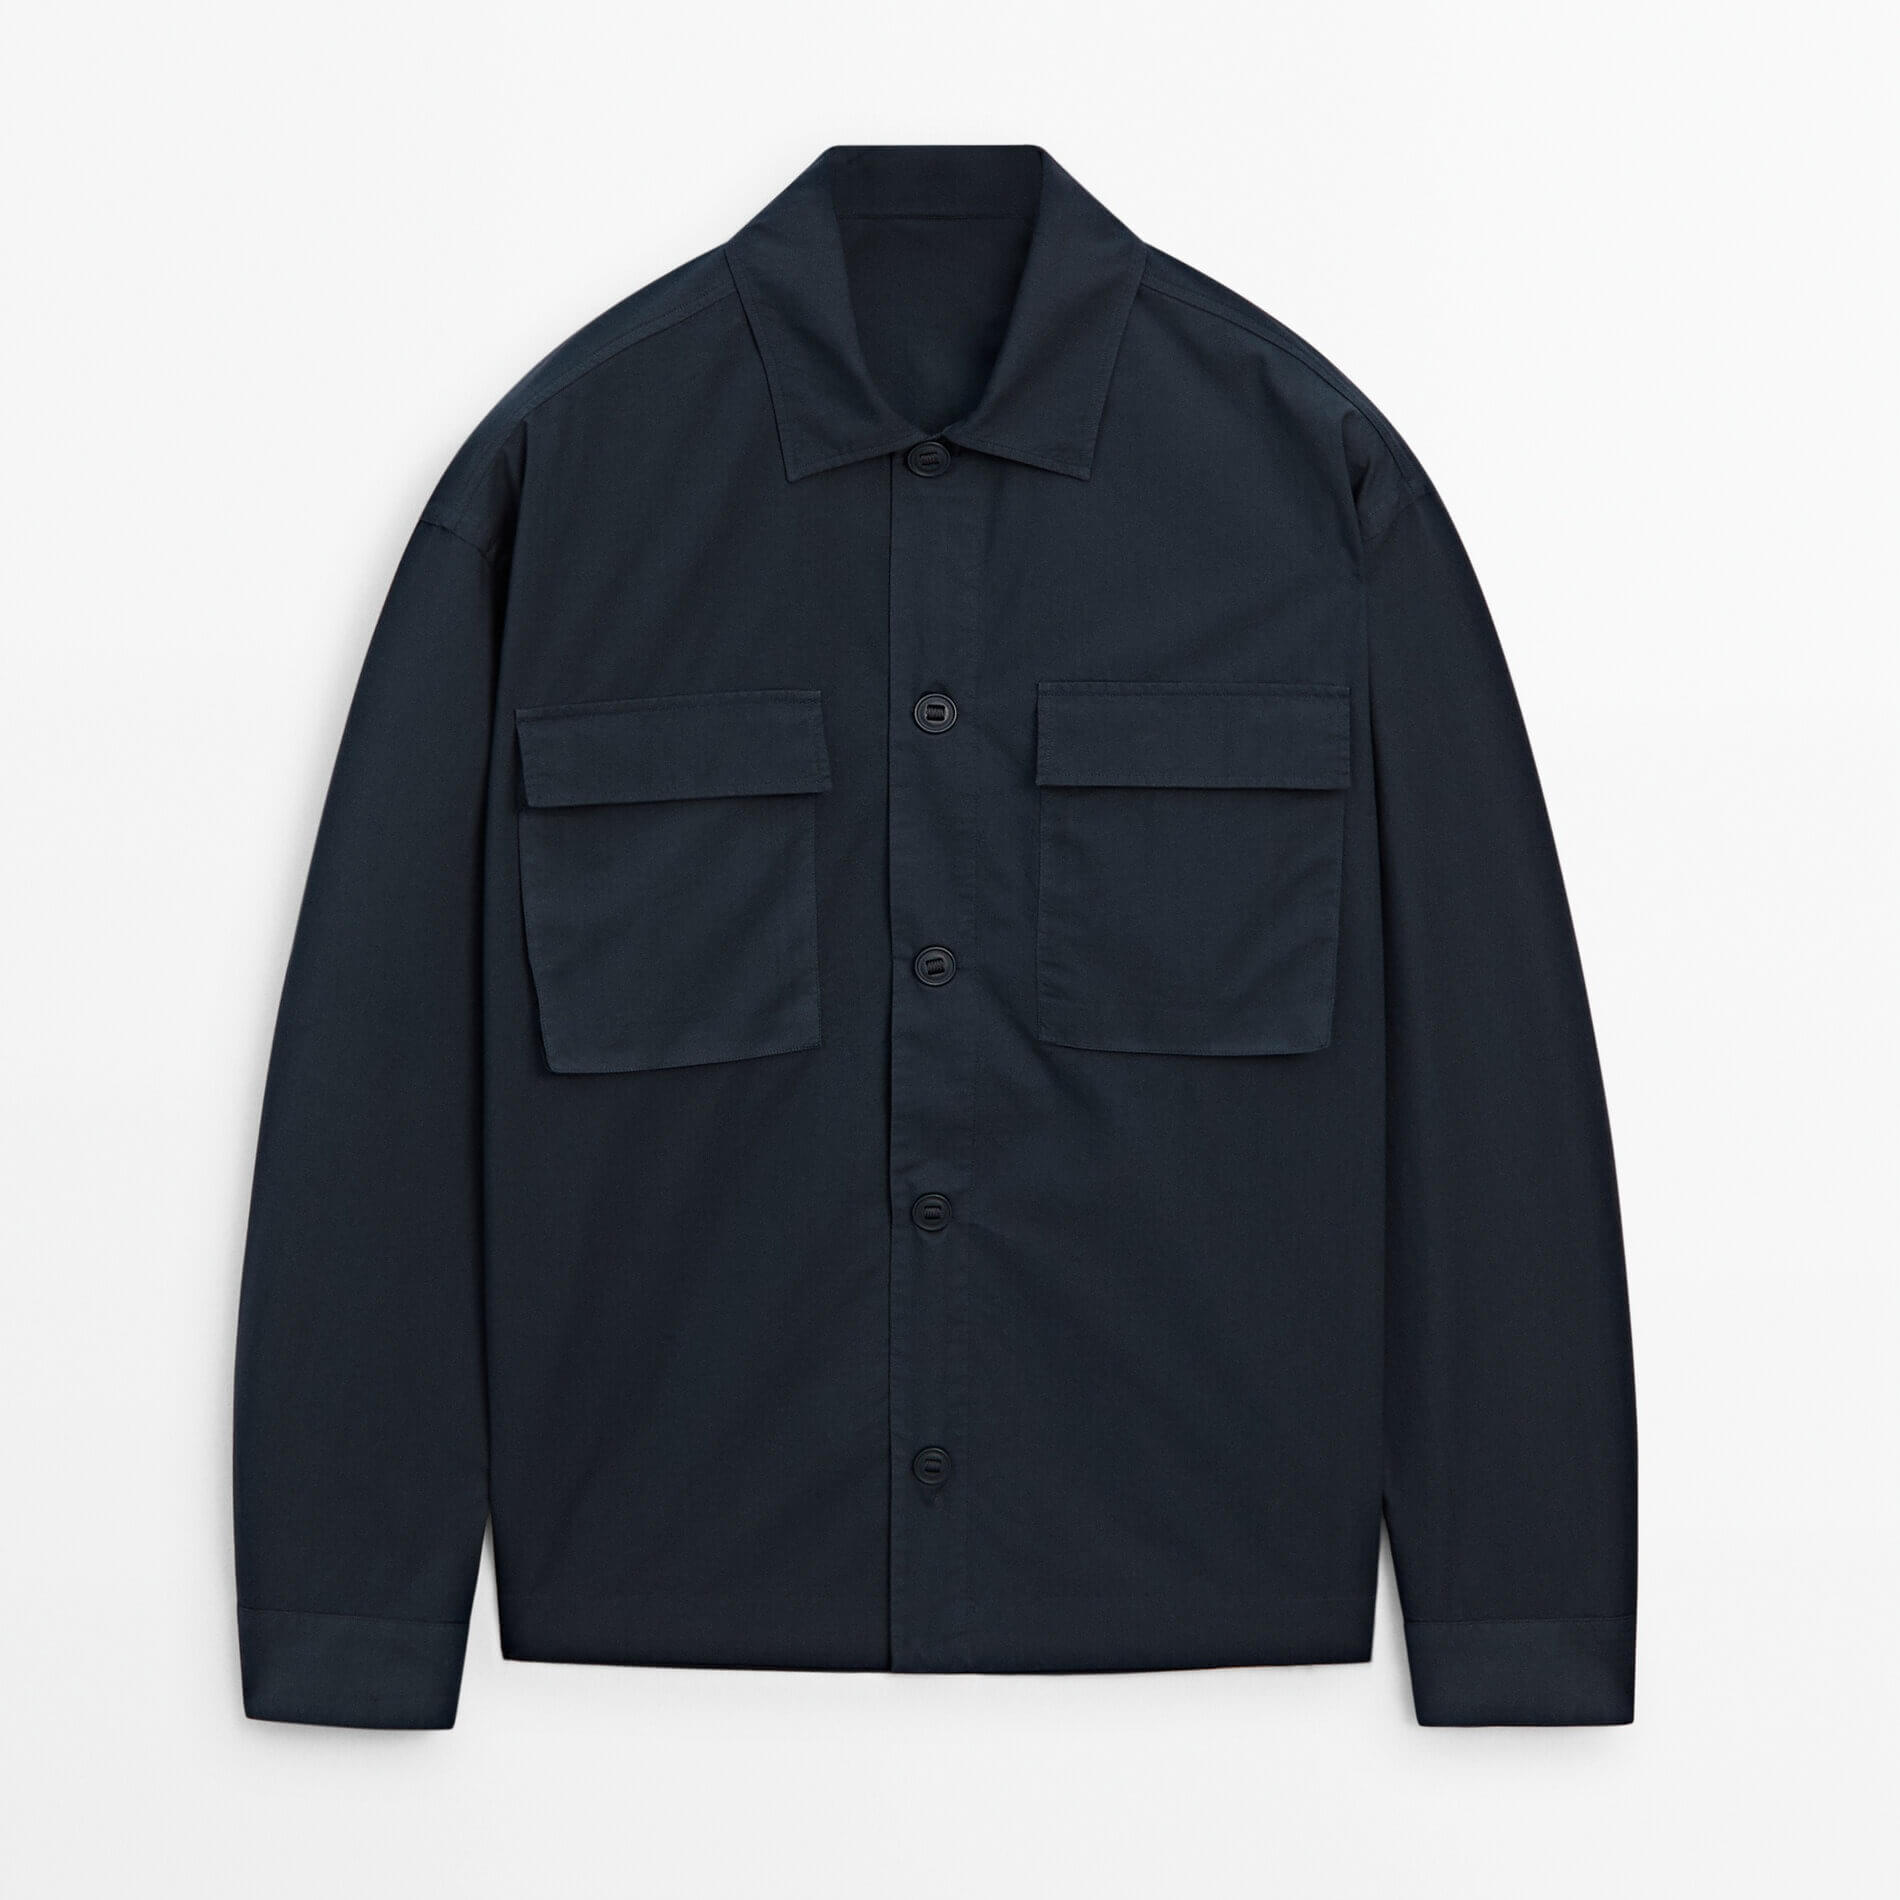 Куртка-рубашка Massimo Dutti Cotton With Chest Pockets, темно-синий куртка рубашка massimo dutti zip up with chest pockets хаки